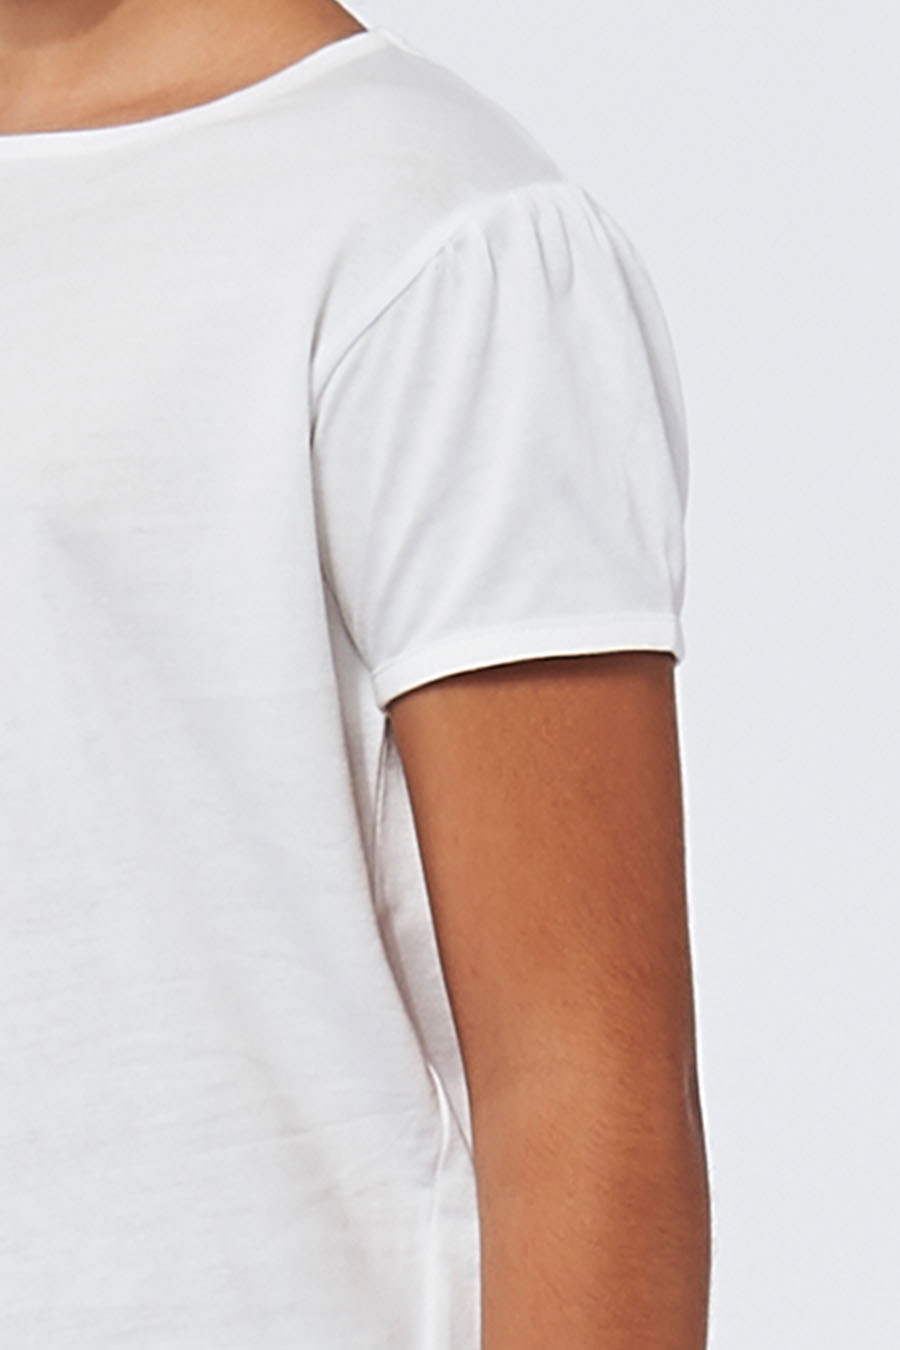 zoom tee-shirt fille made in France en coton bio RAFFAELLA blanc - FIL ROUGE